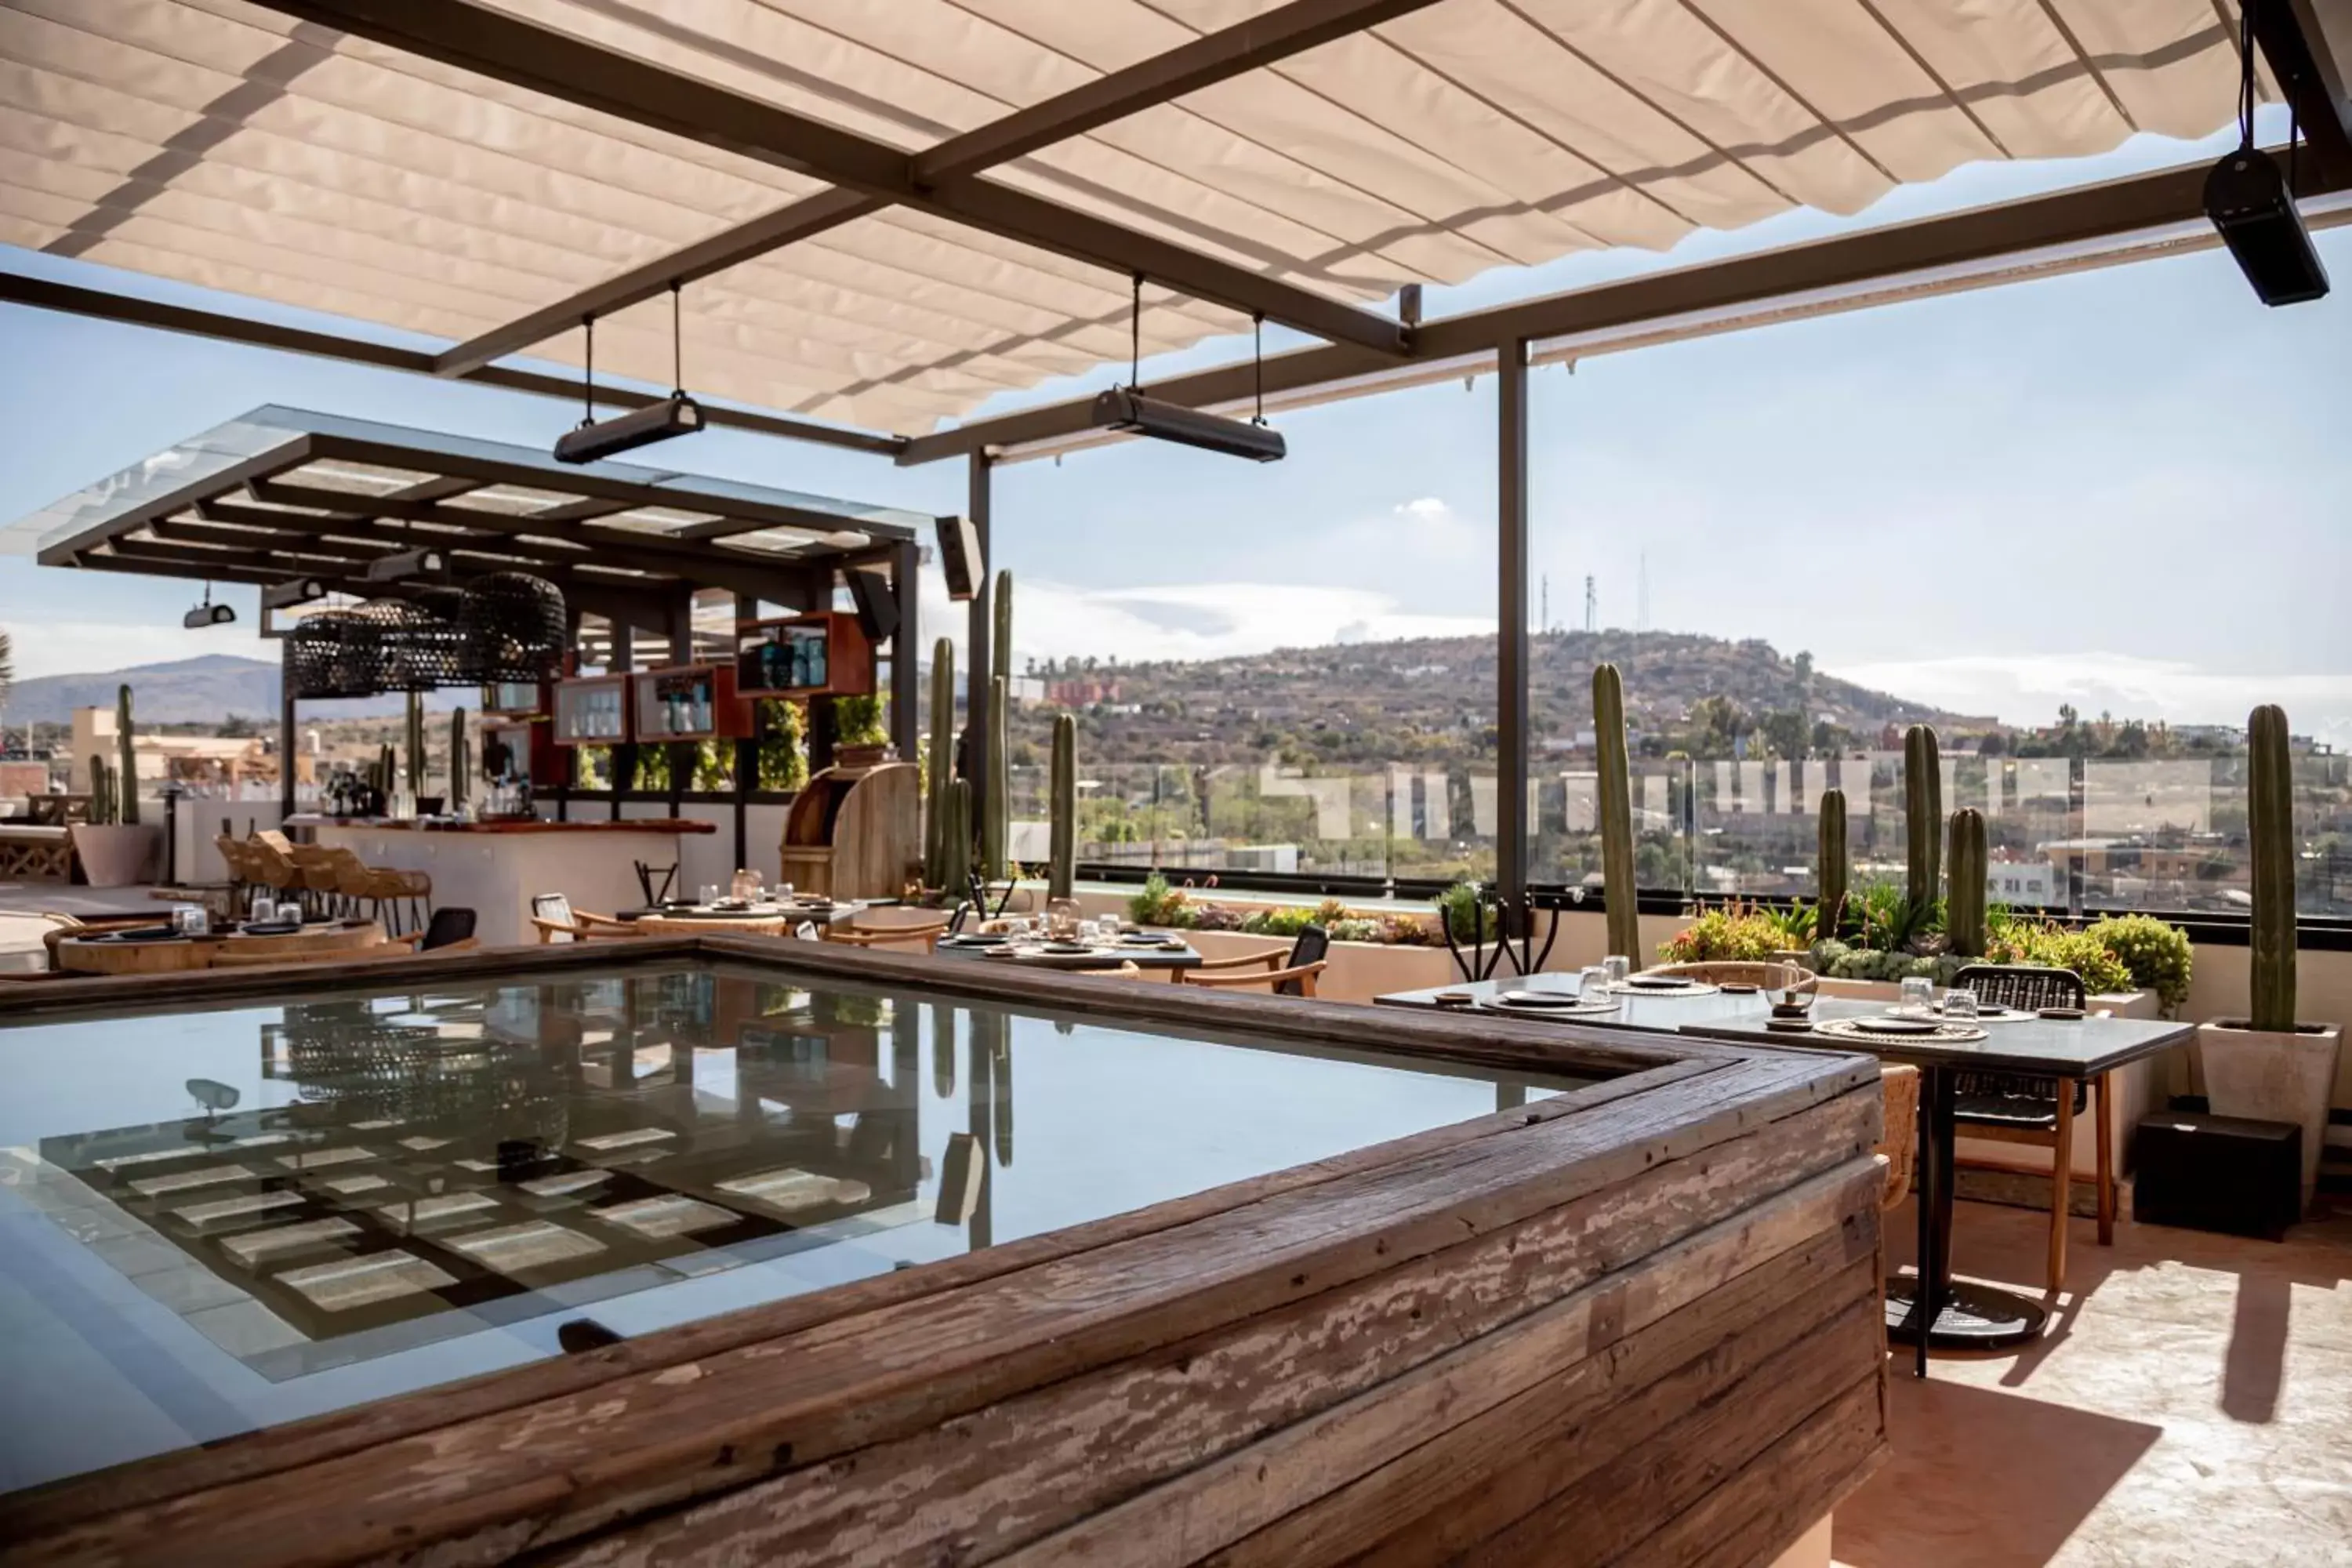 Restaurant/places to eat, Swimming Pool in Amatte San Miguel de Allende